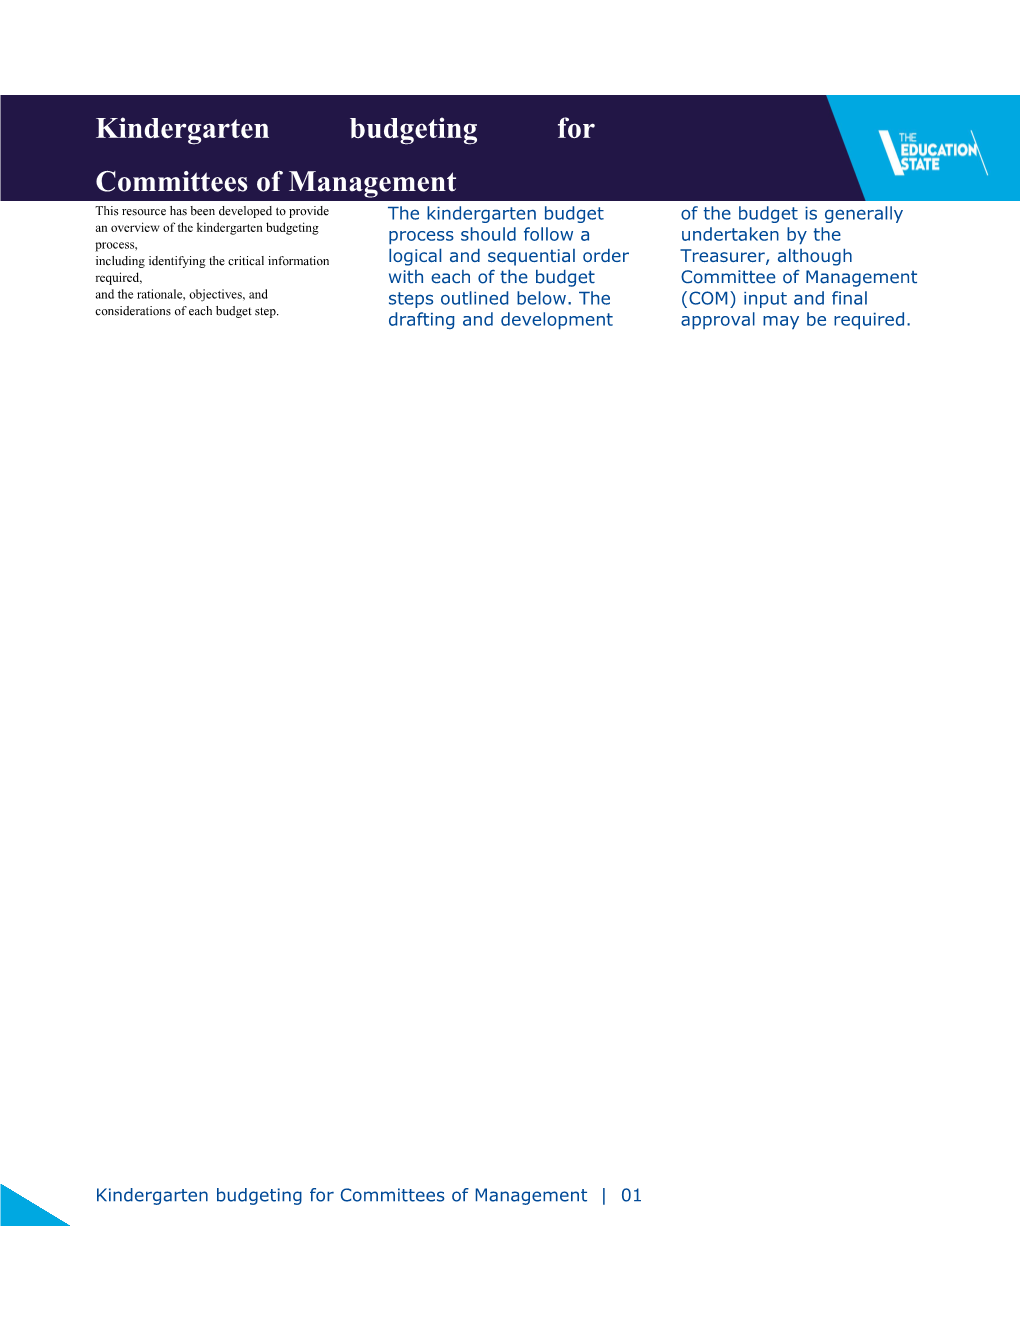 Tip Sheet 7 - Kindergarten Budgeting for Committees of Management